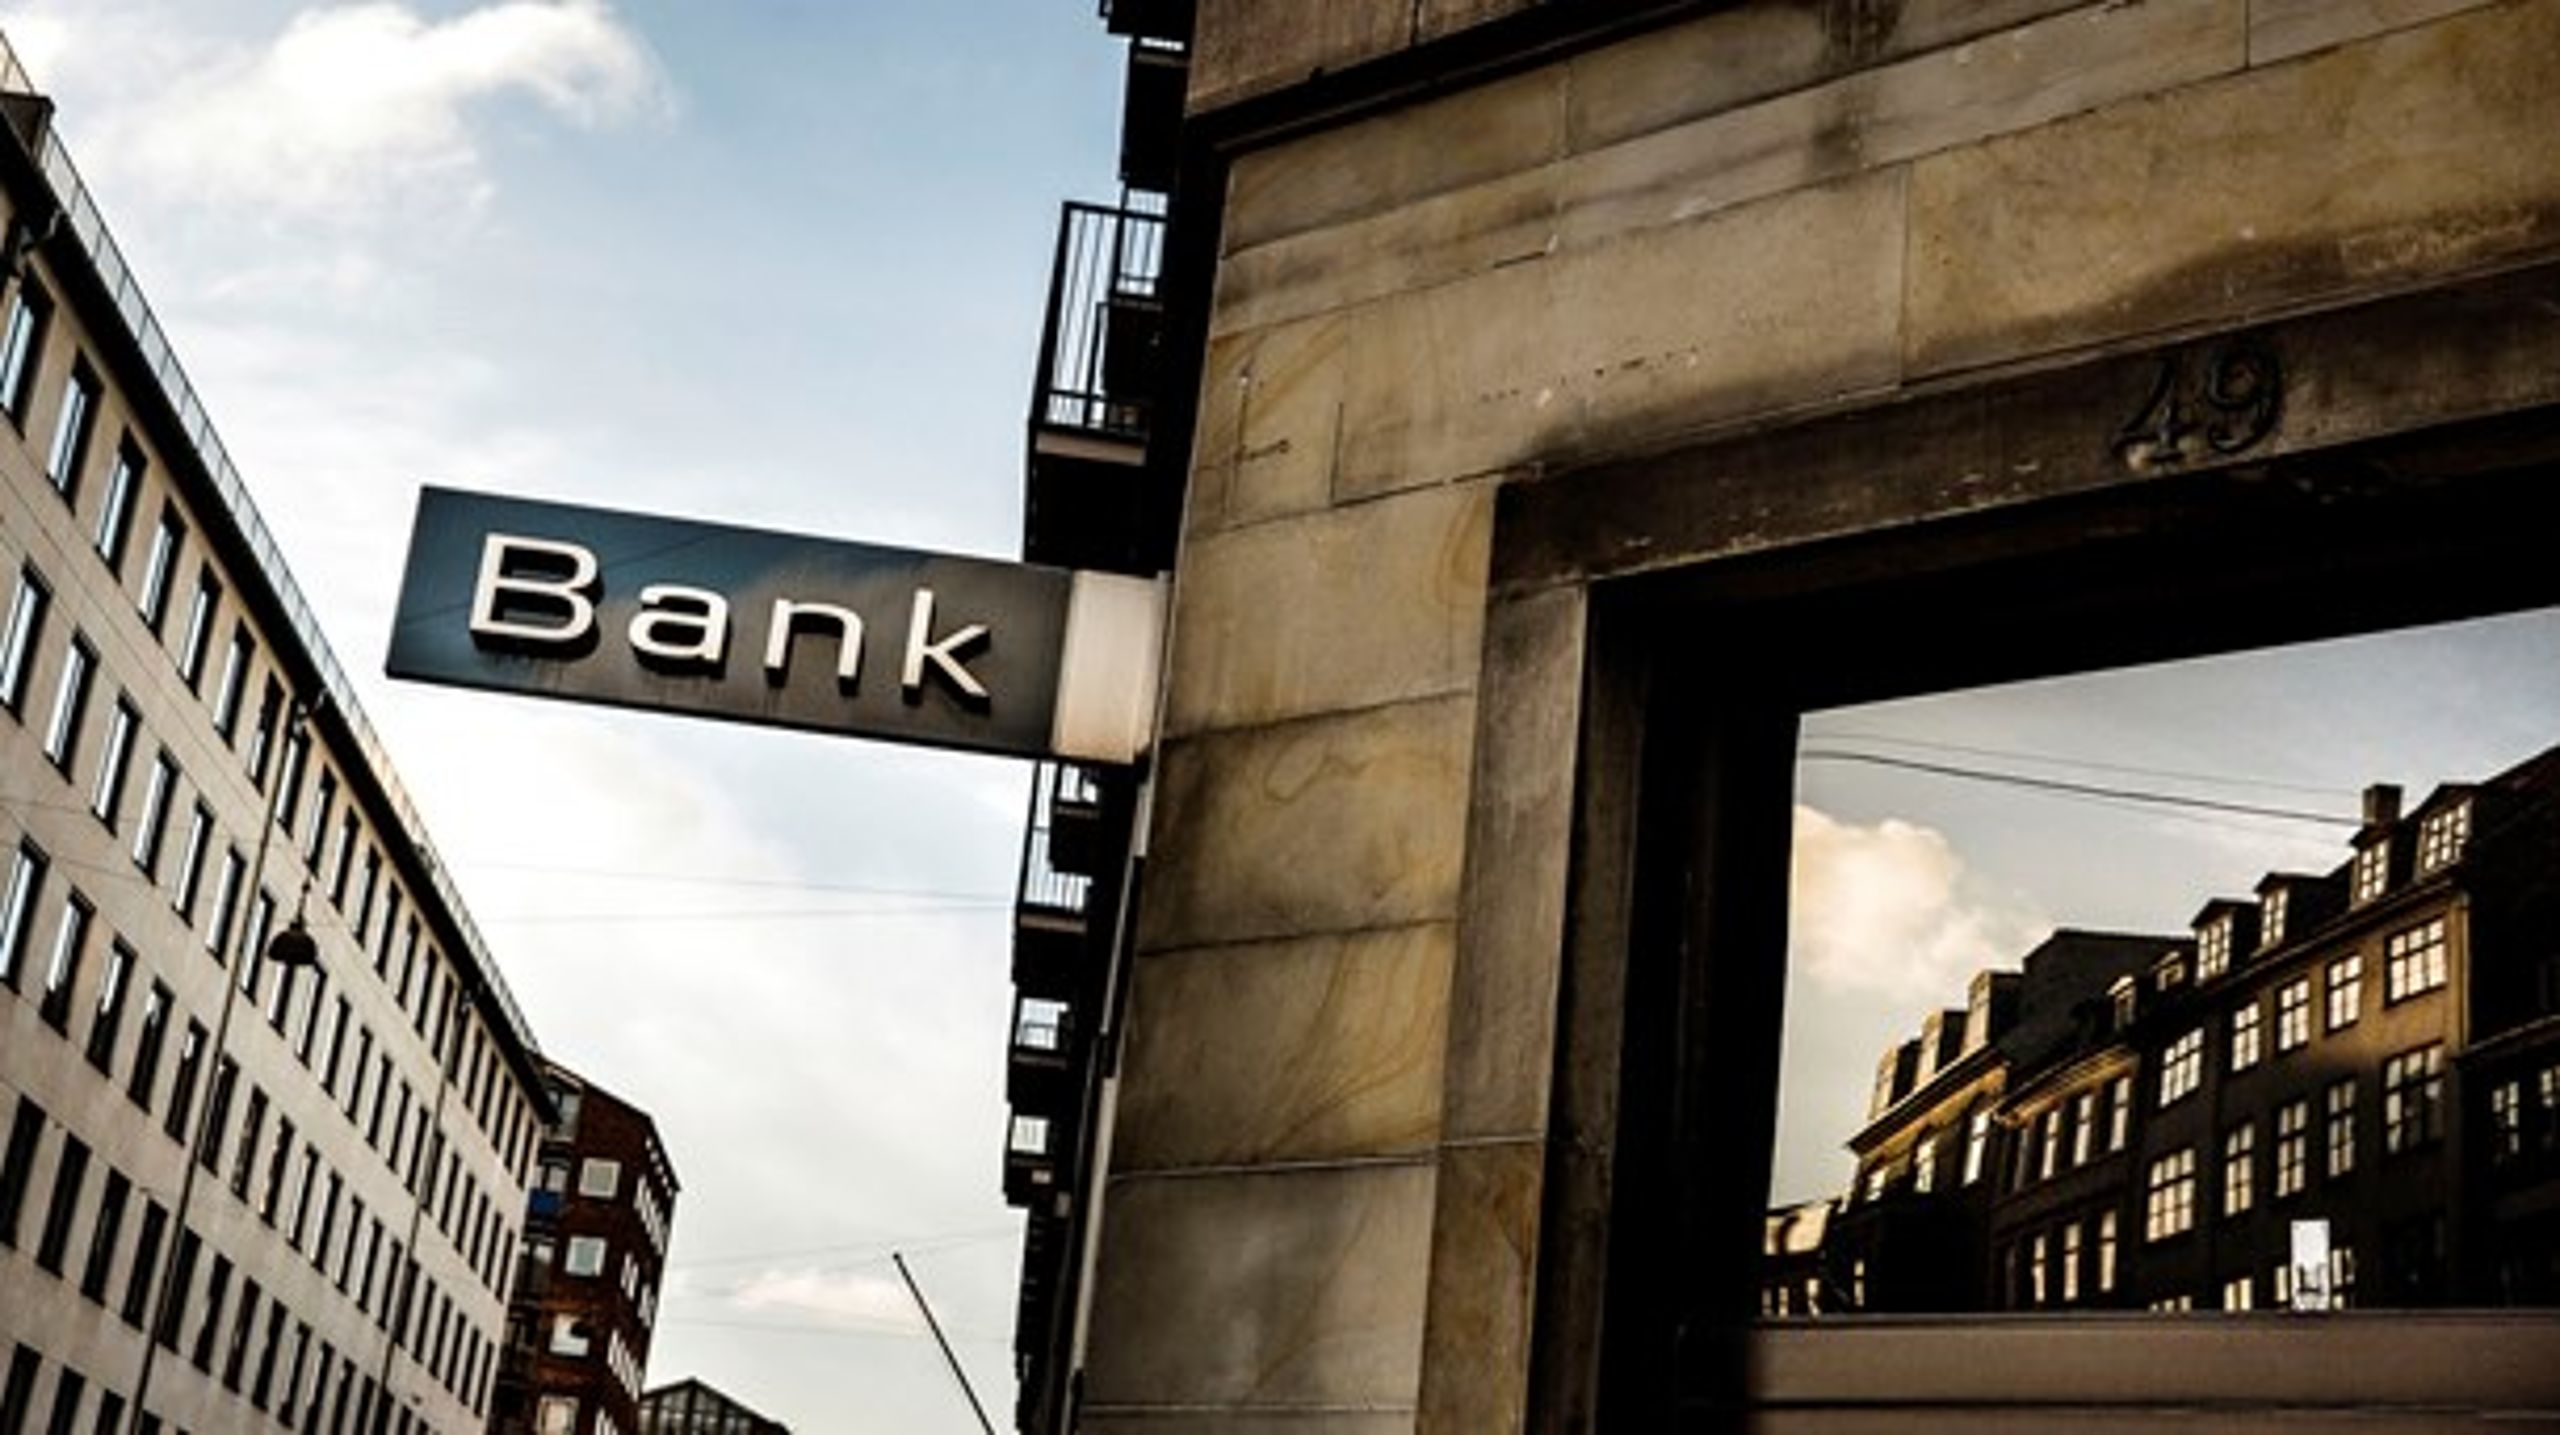 At nægte Danmark adgang til Bankunionen gavner kun banditter i habitter, skriver Martin Lidegaard (R).